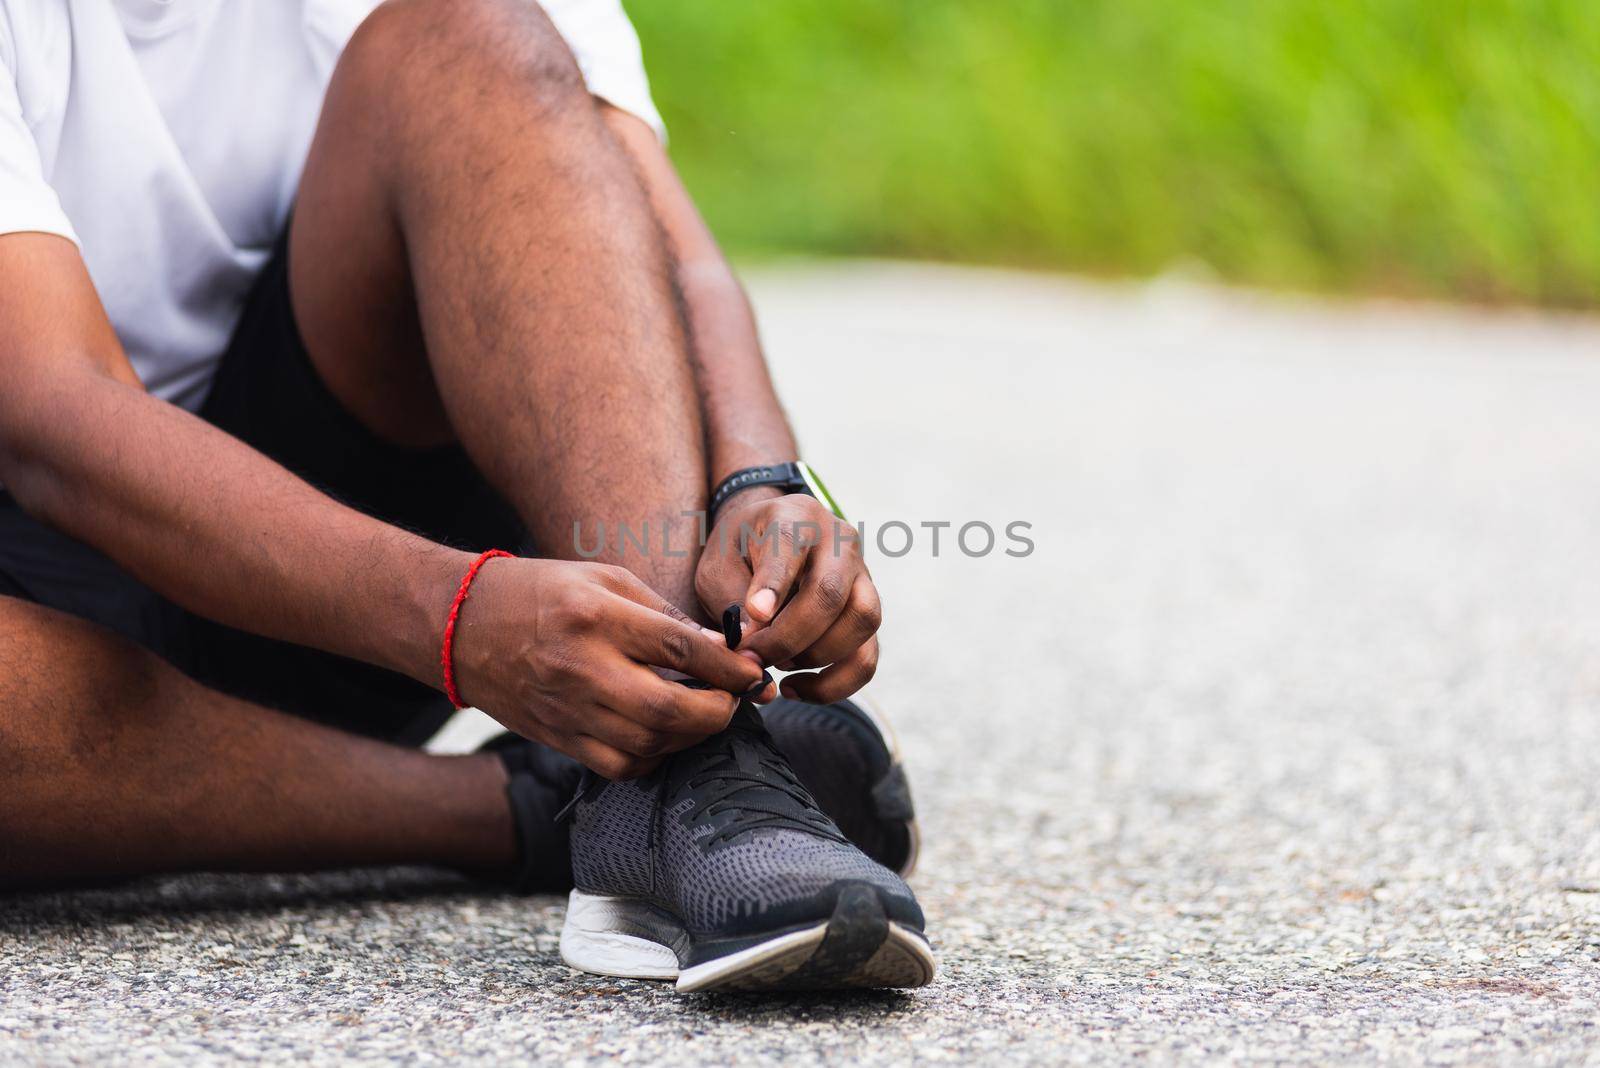 runner black man sitting shoelace trying running shoes by Sorapop